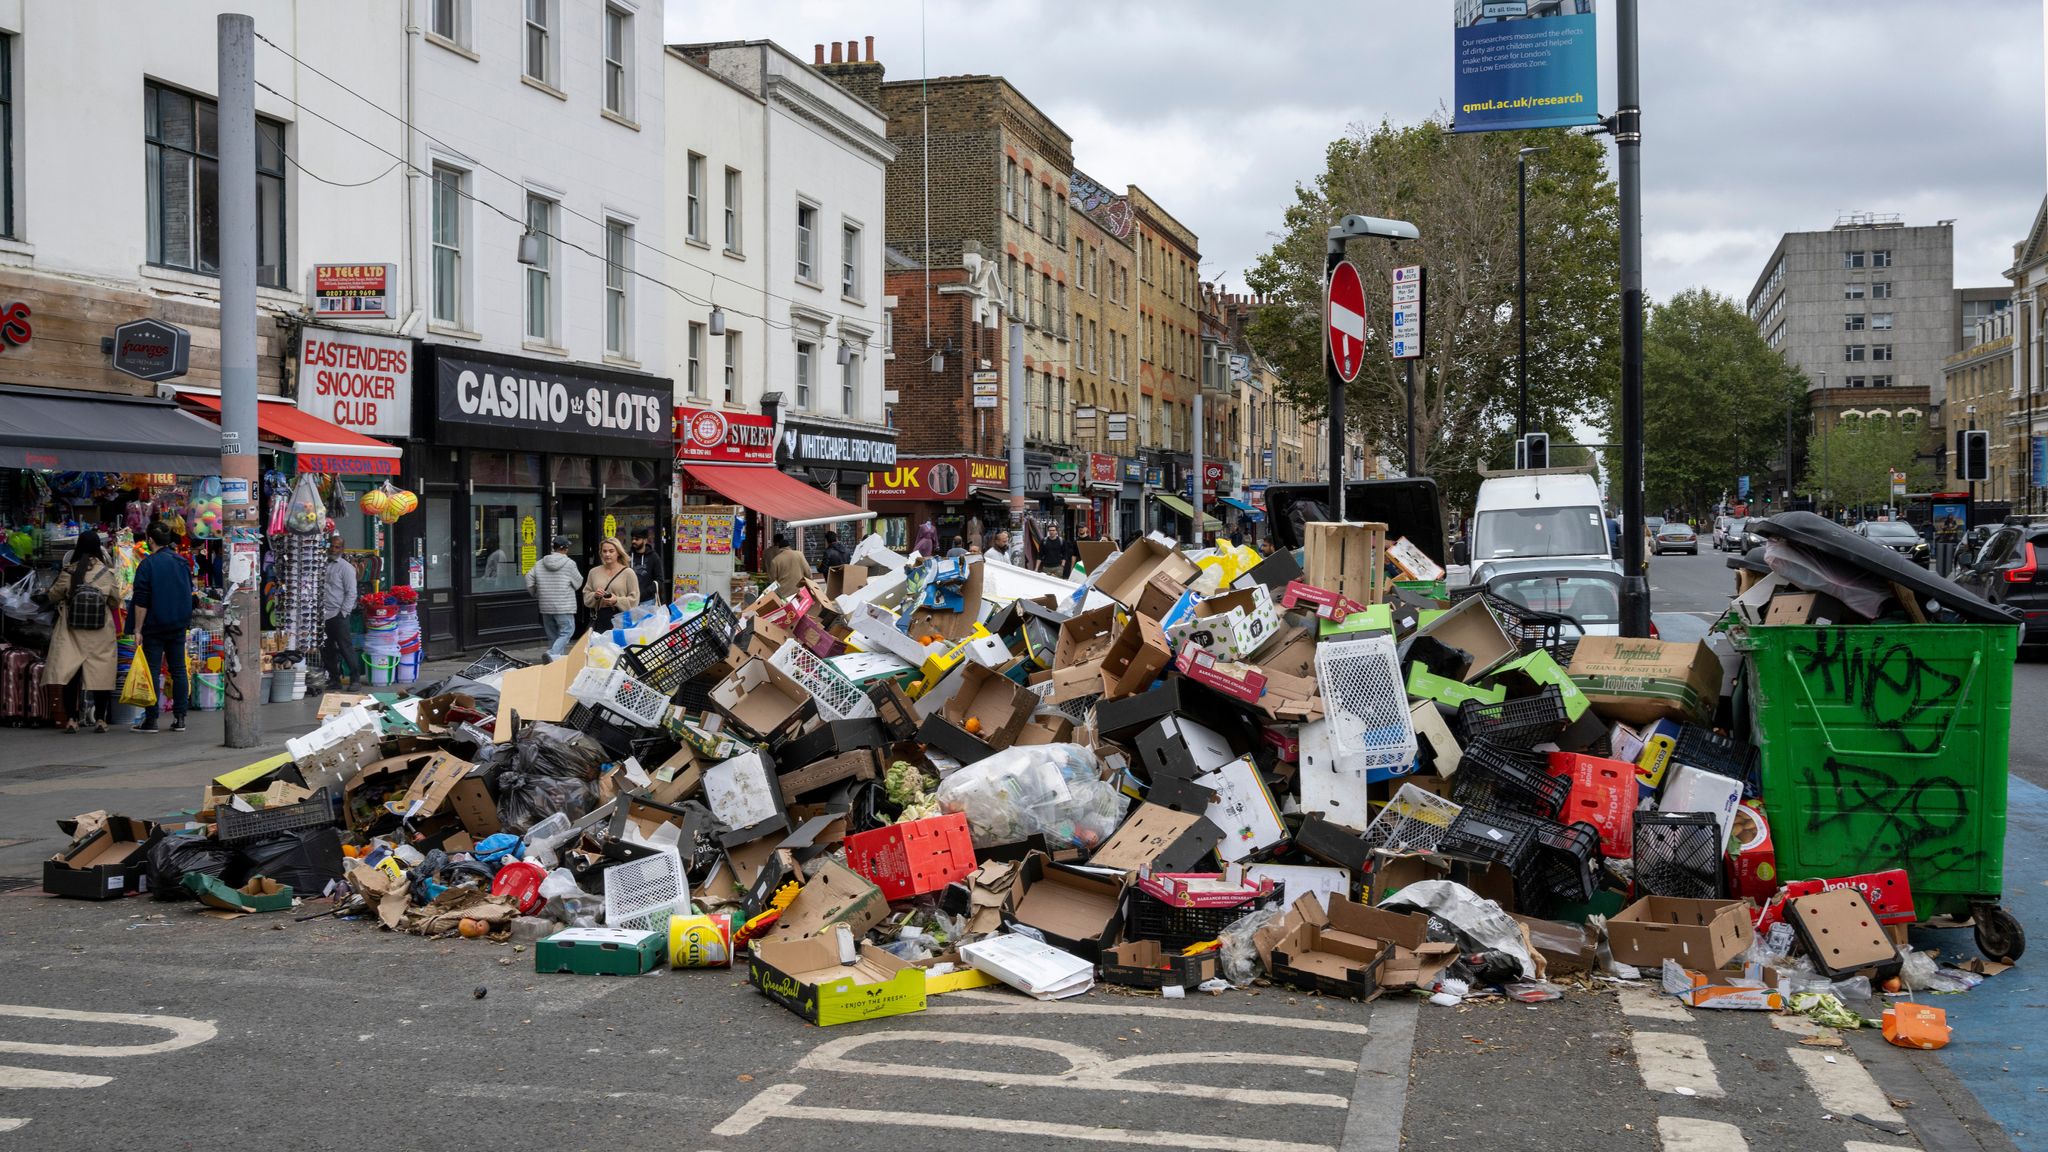 Why Few Trash Cans in London